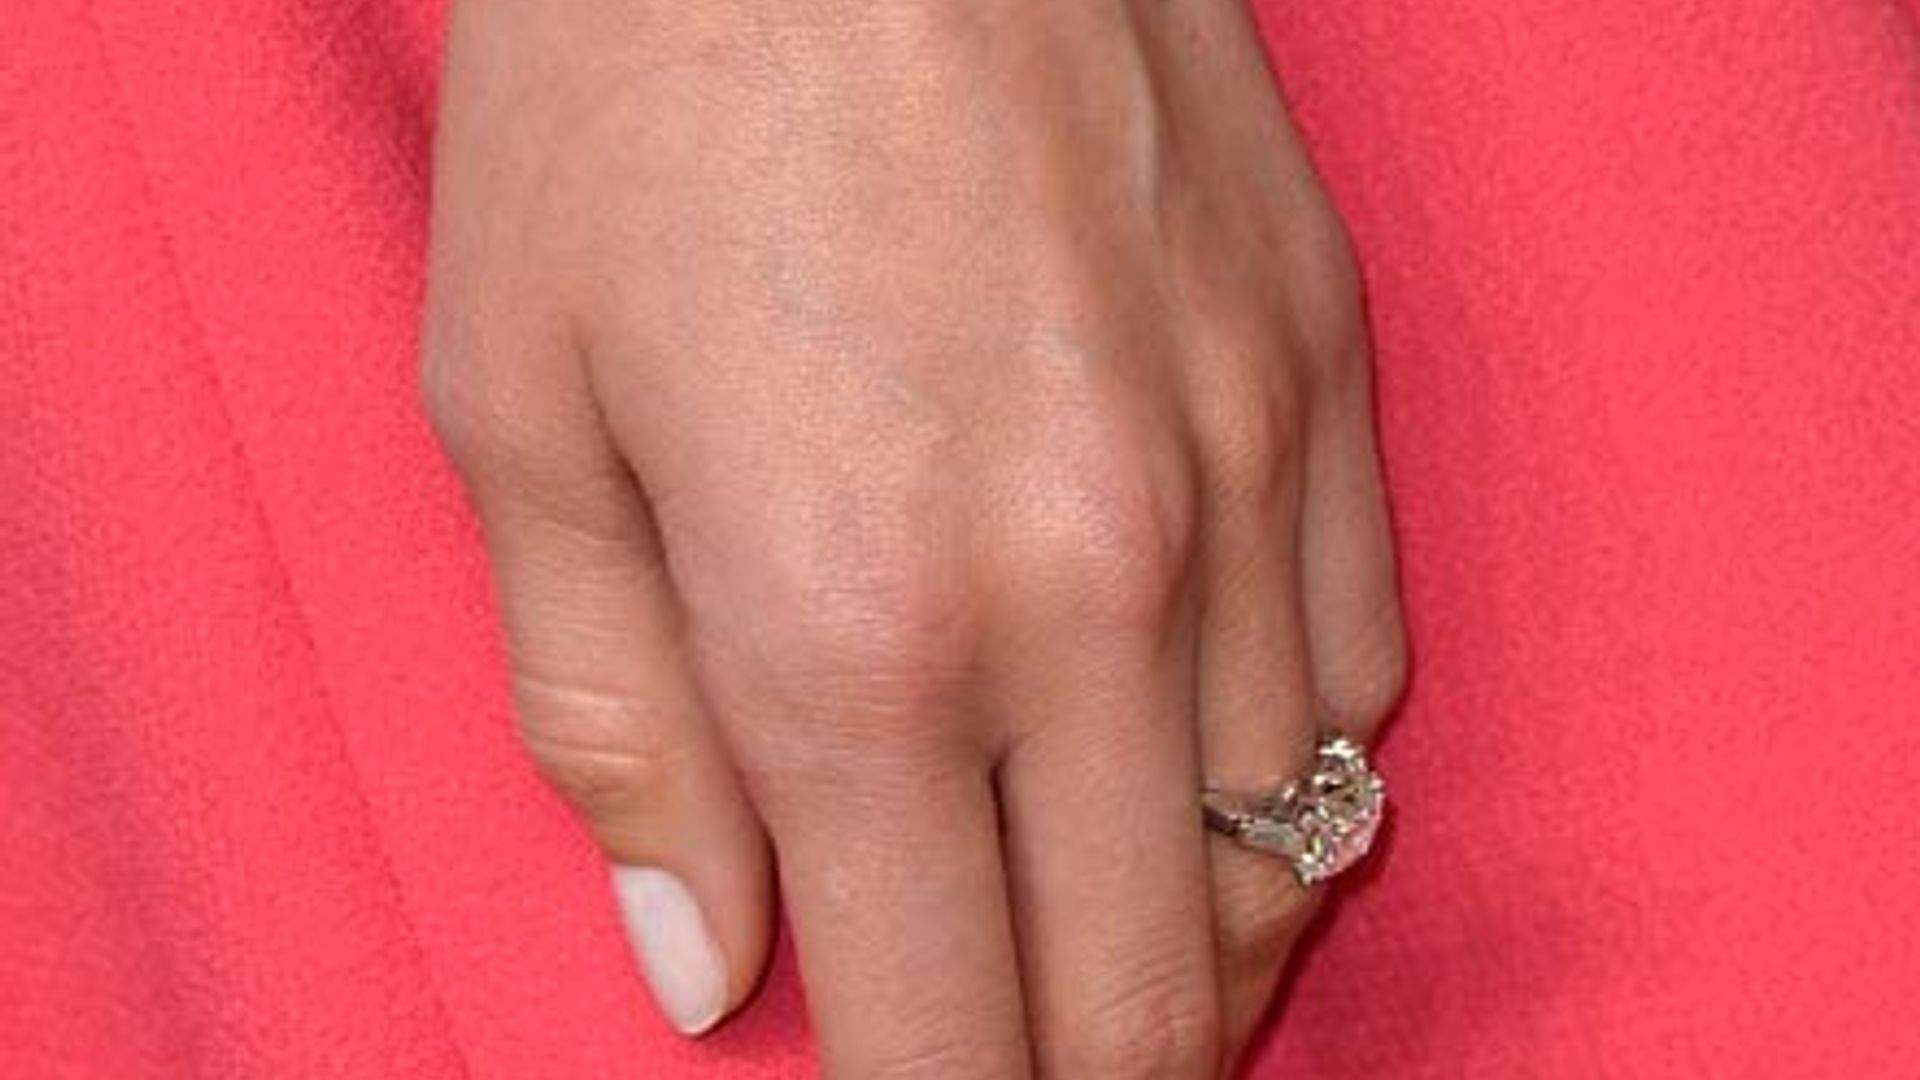 Girls star Lena Dunham 'threatened' to pull prank on Allison Williams' engagement ring